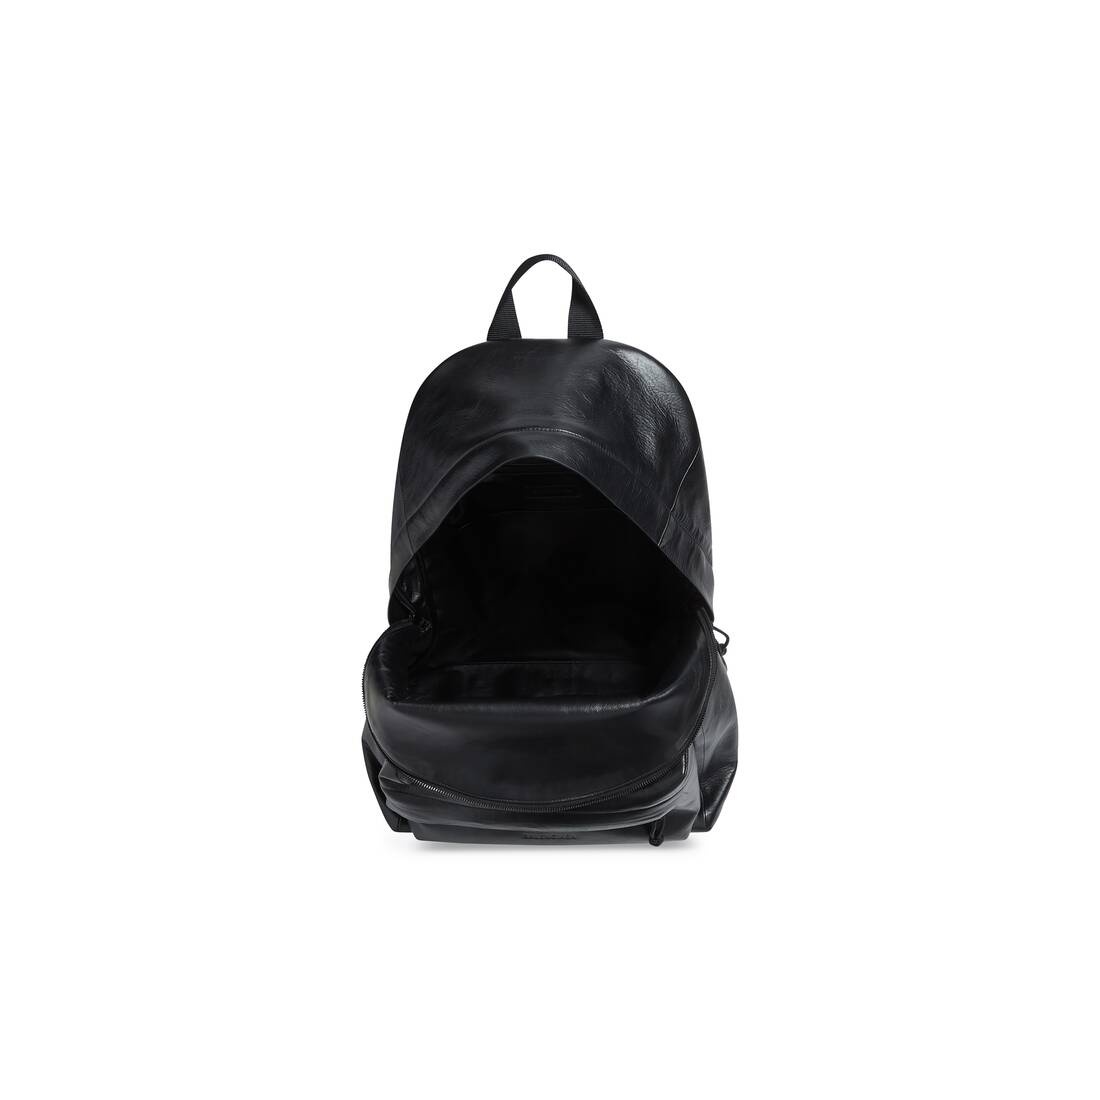 Men's Premium Xxl Backpack in Black - 6